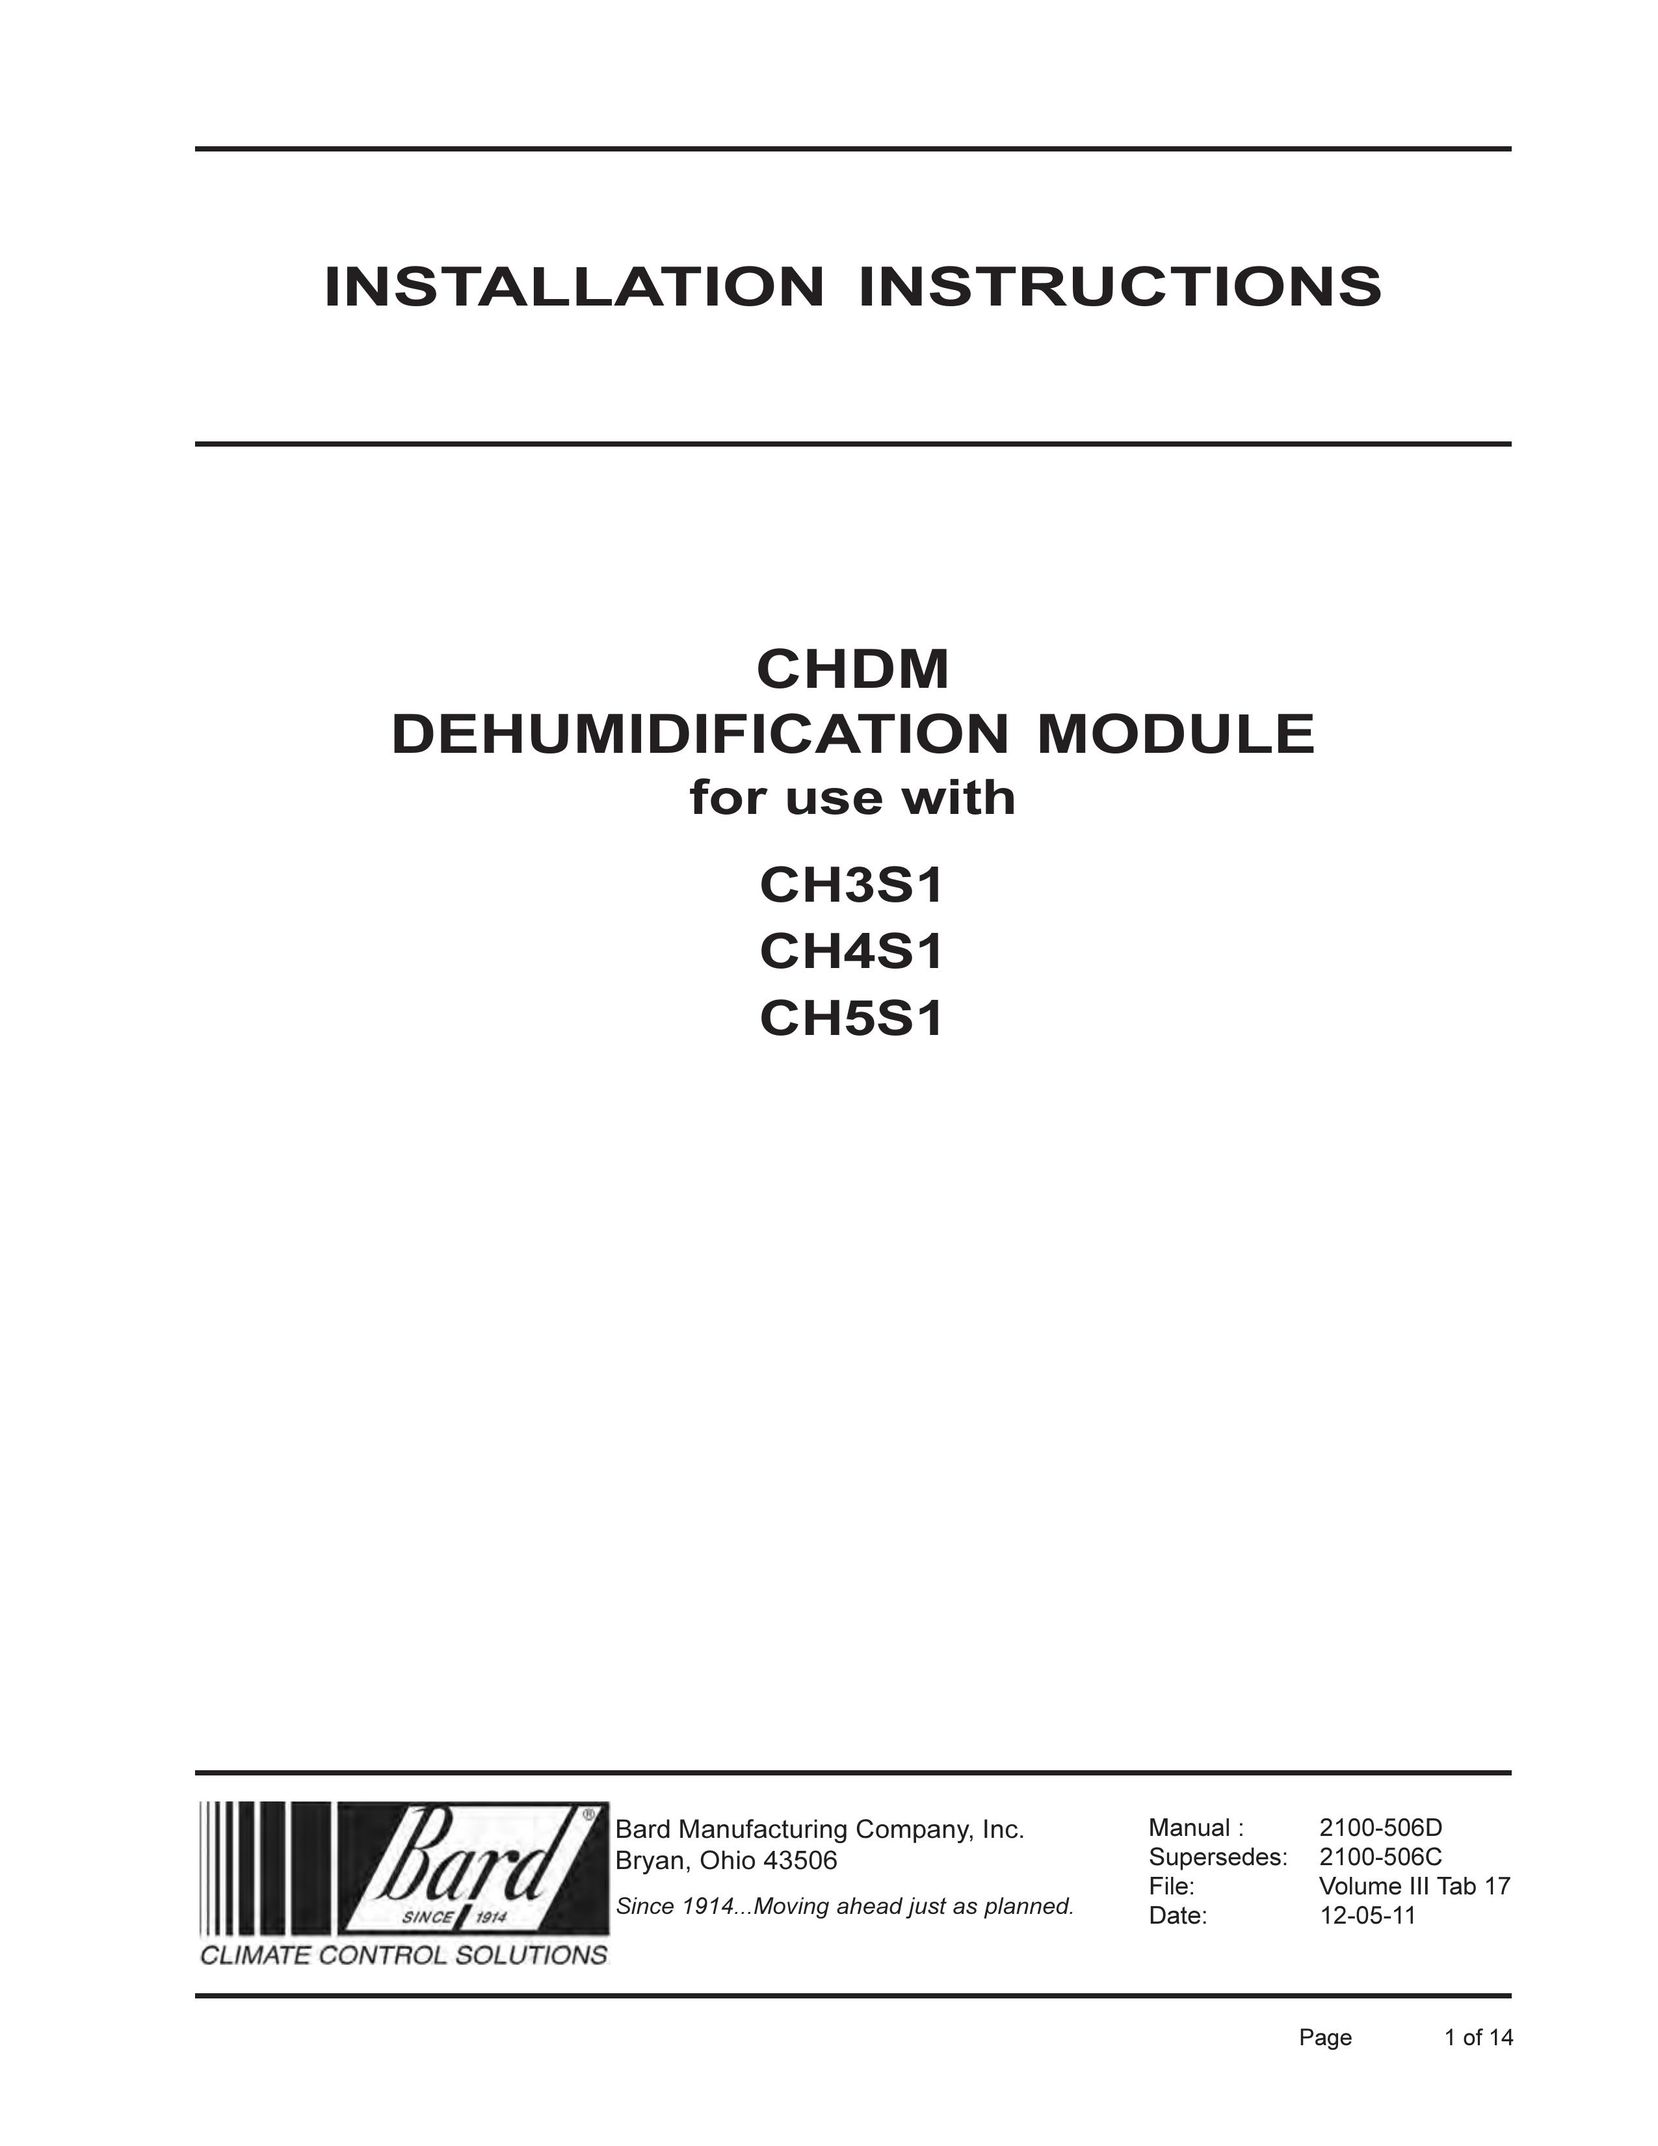 Bard CH4S1 Dehumidifier User Manual